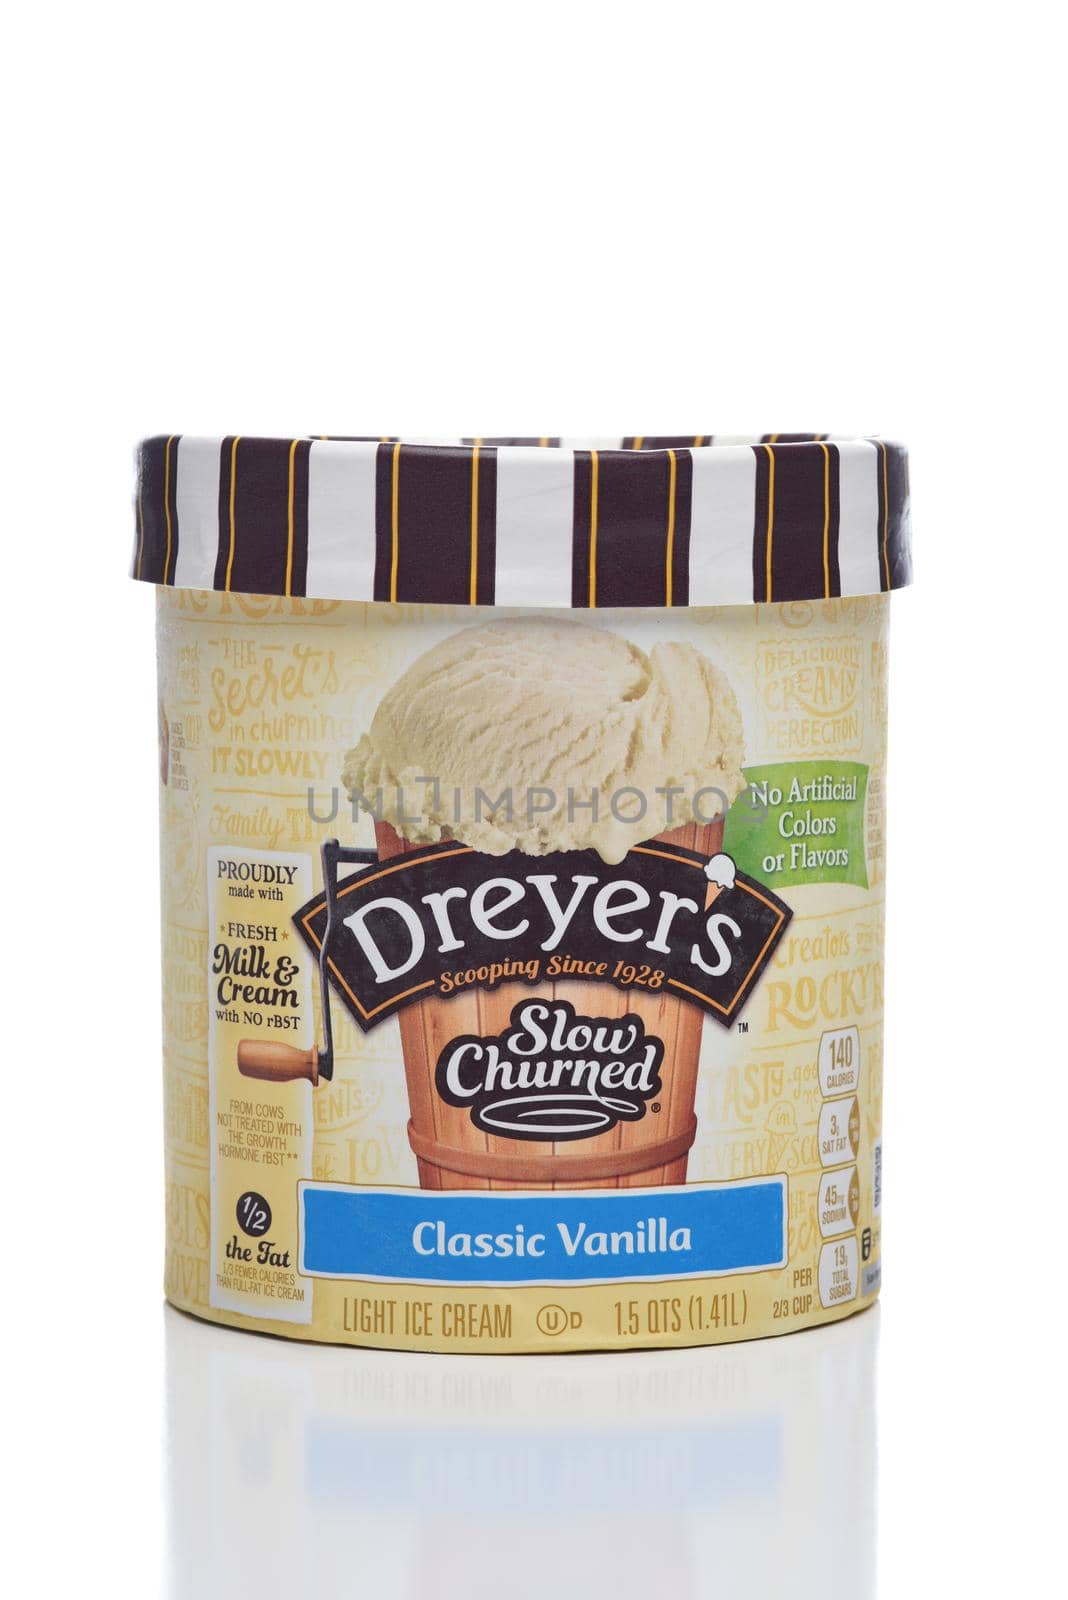 IRIVNE, CALIFORNIA - 4 JULY 2021: A Carton of Dreyers Slow Churned Classic Vanilla Ice Cream. by sCukrov